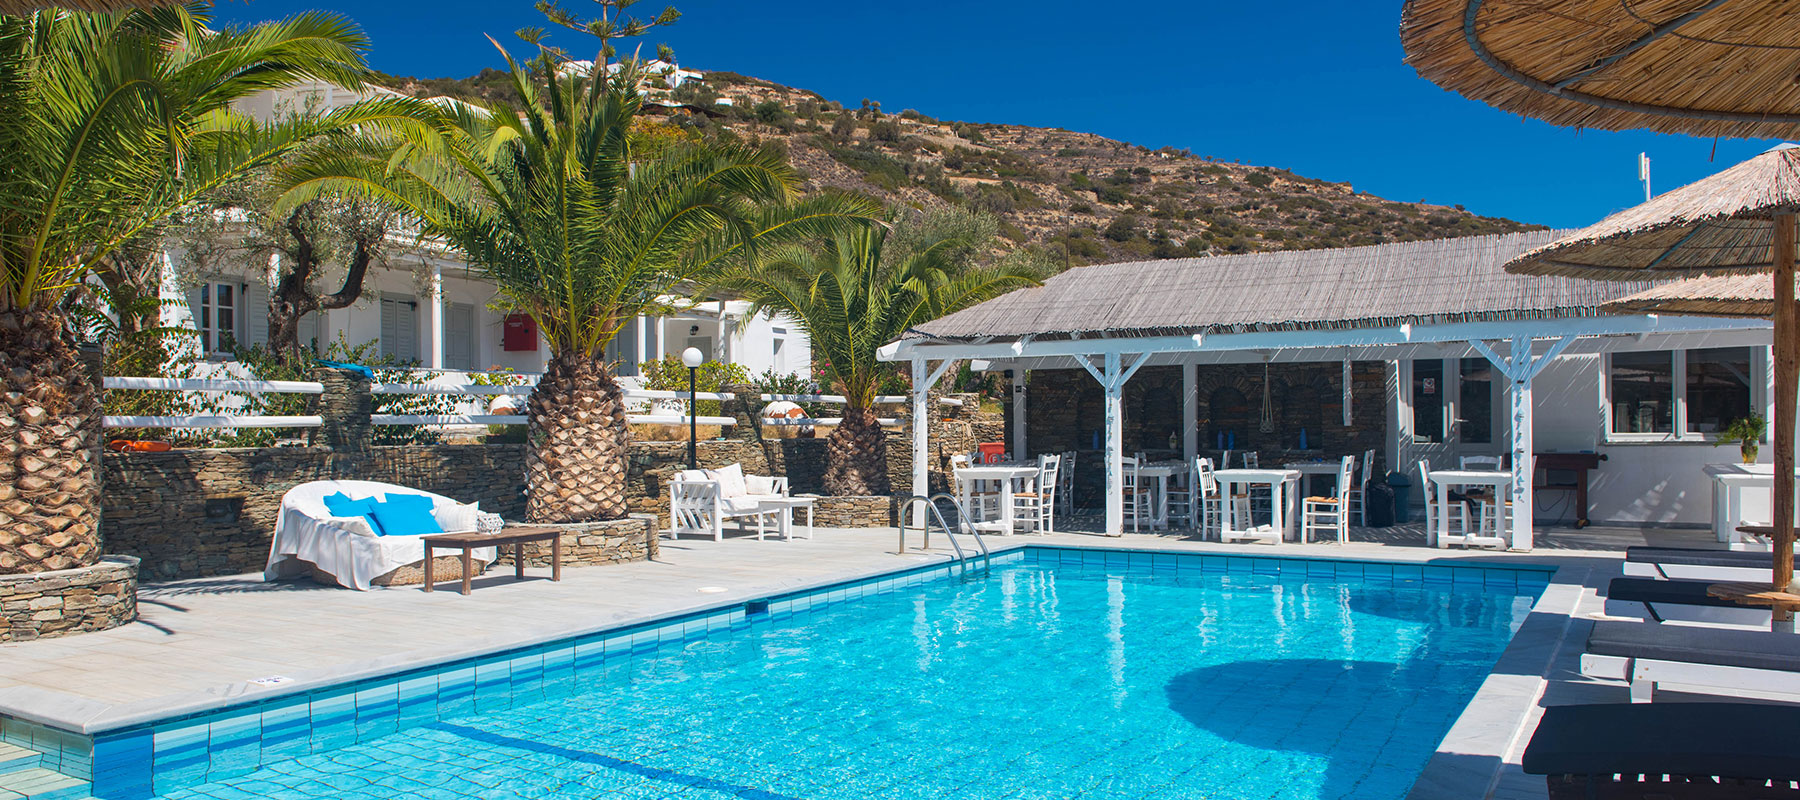 The pool area of Villa Irini in Sifnos